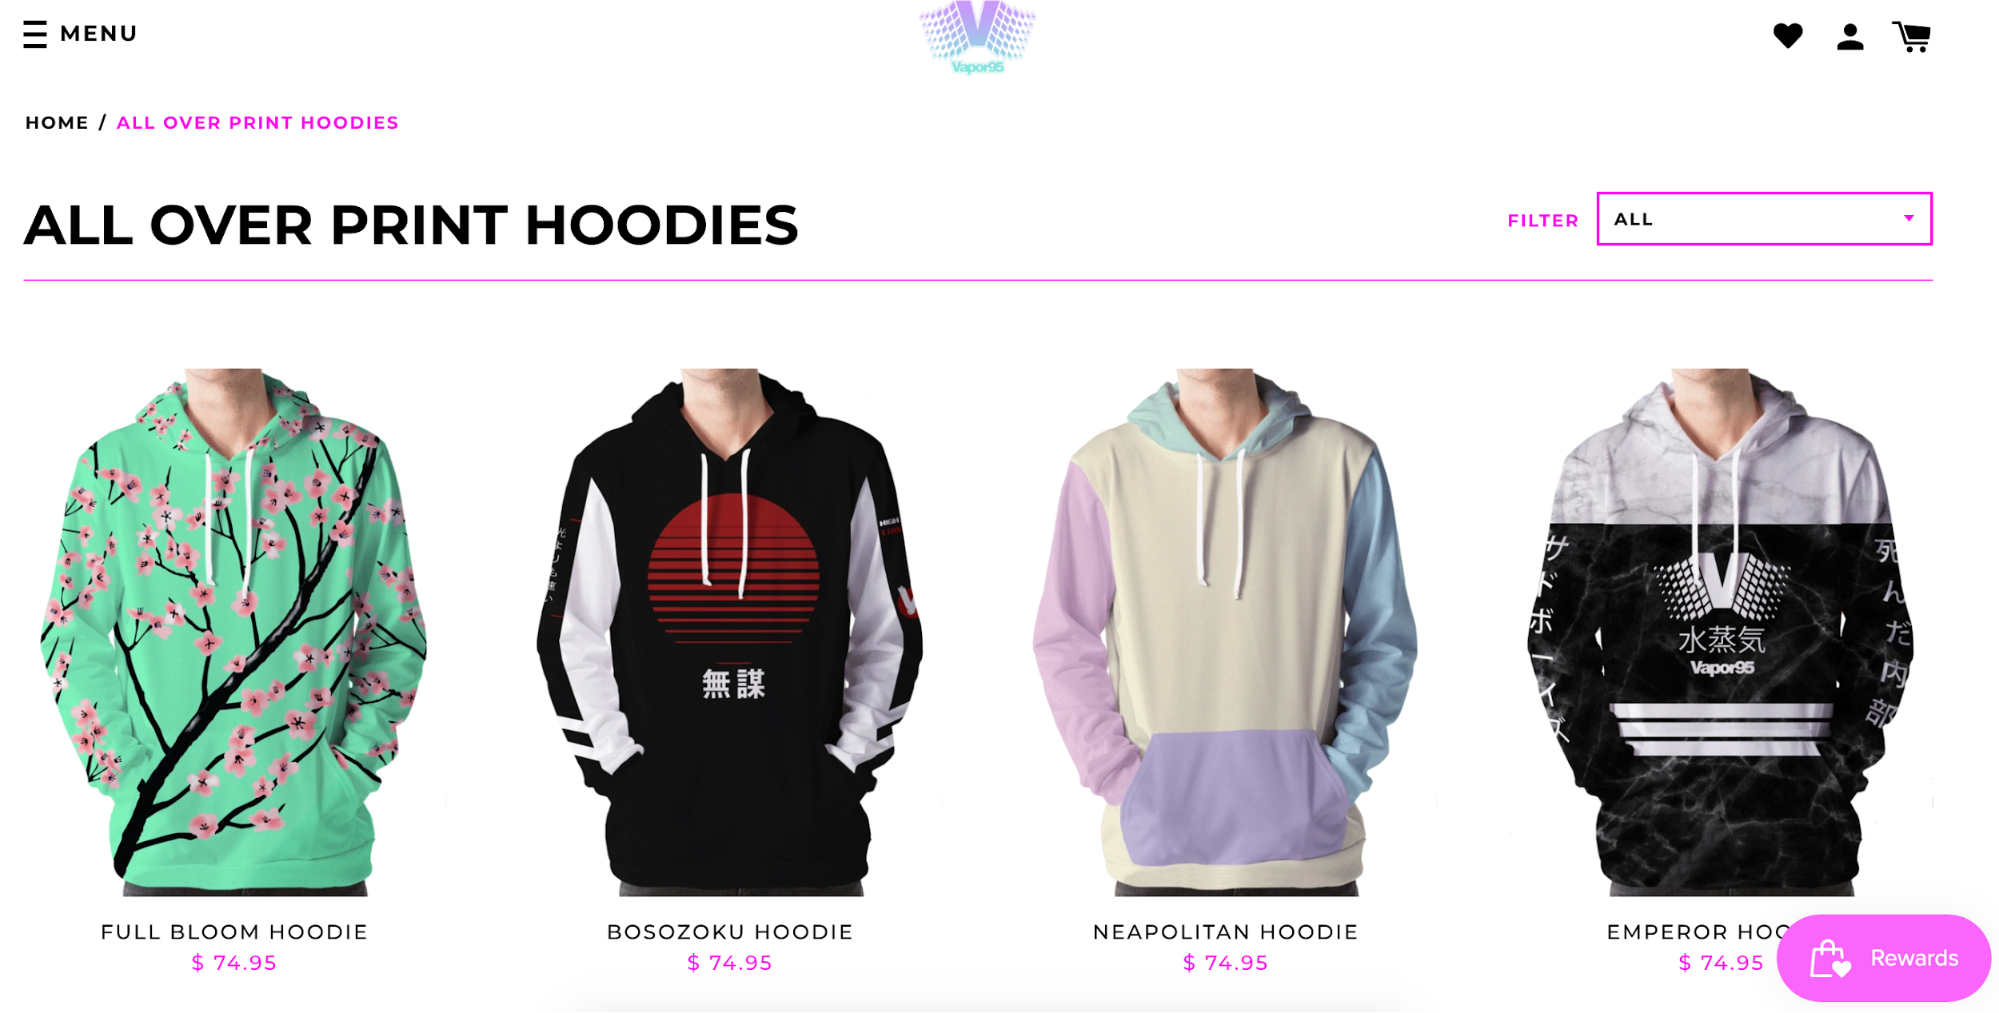 All-over print hoodies